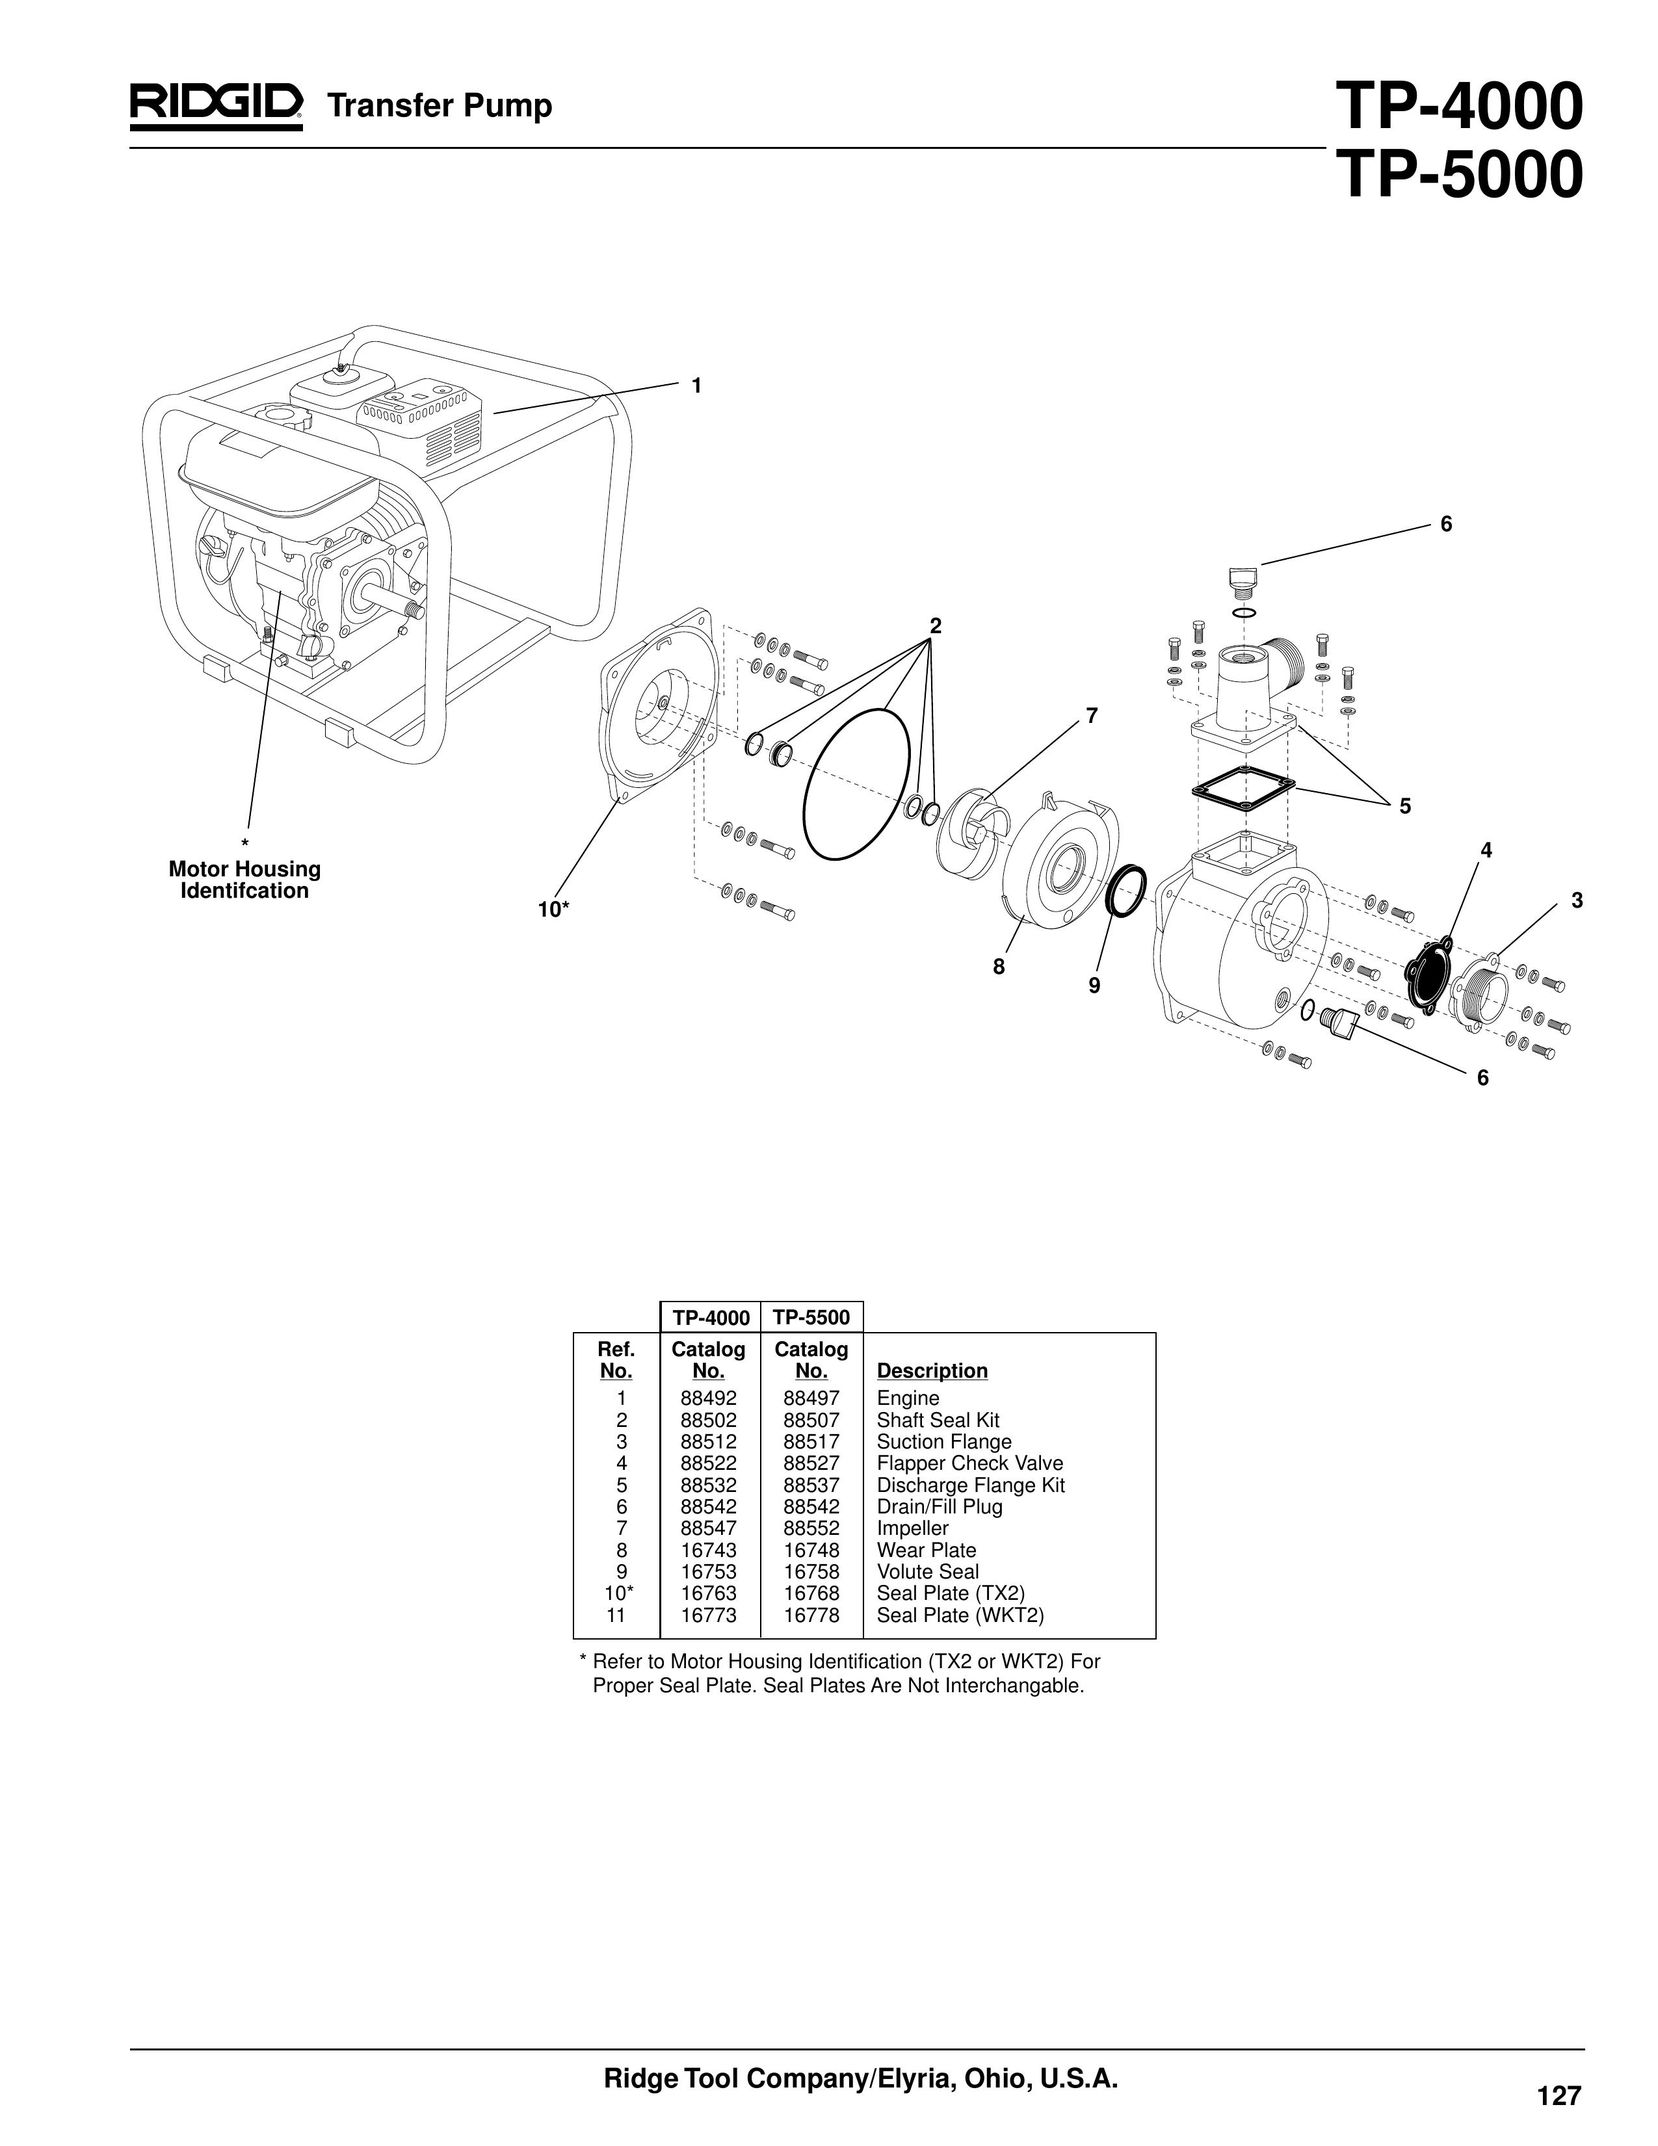 RIDGID TP-4000 Water Pump User Manual